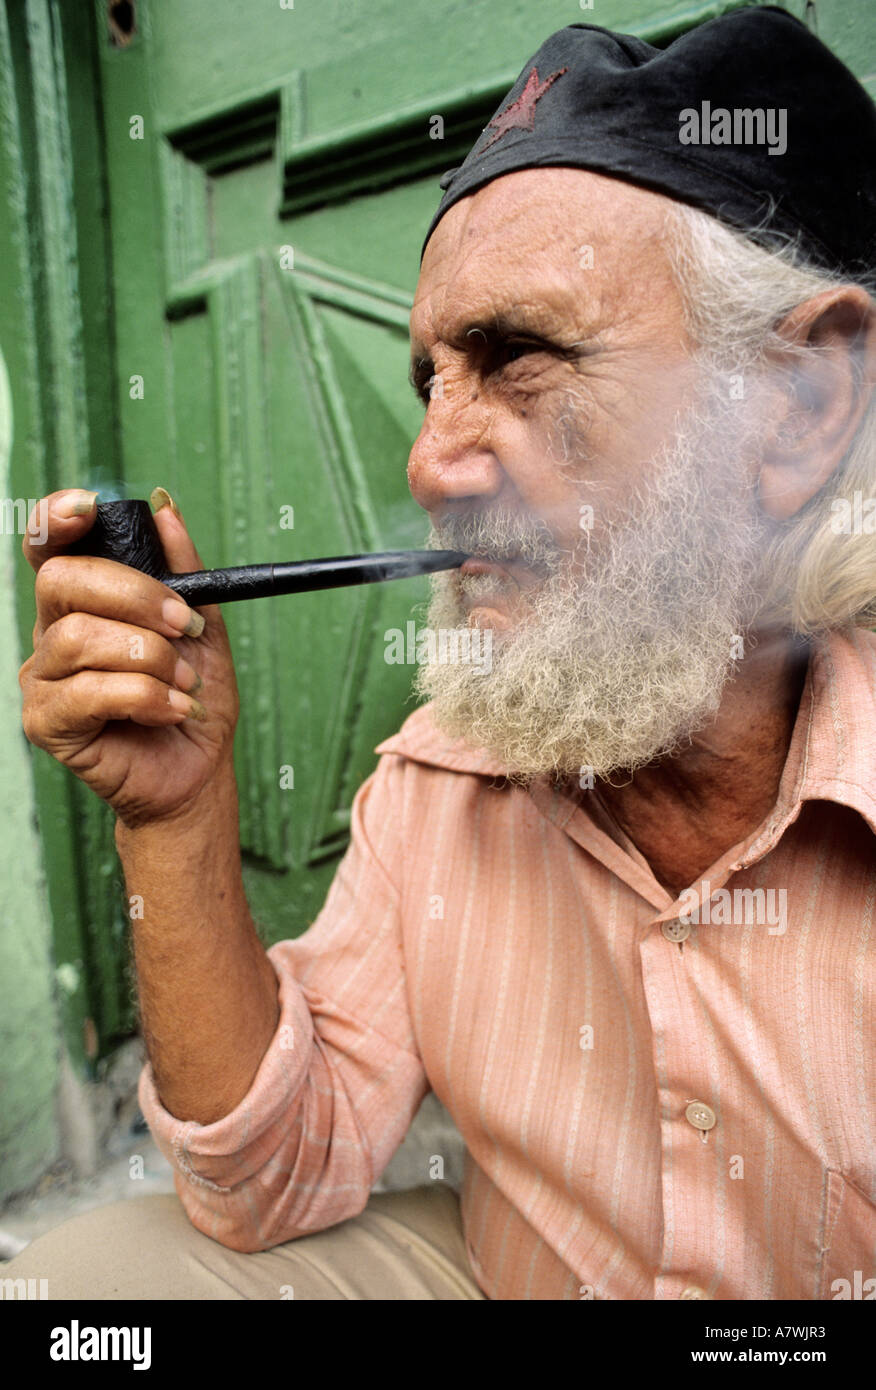 Cuba, Havana, old town, a pipe smoker Stock Photo